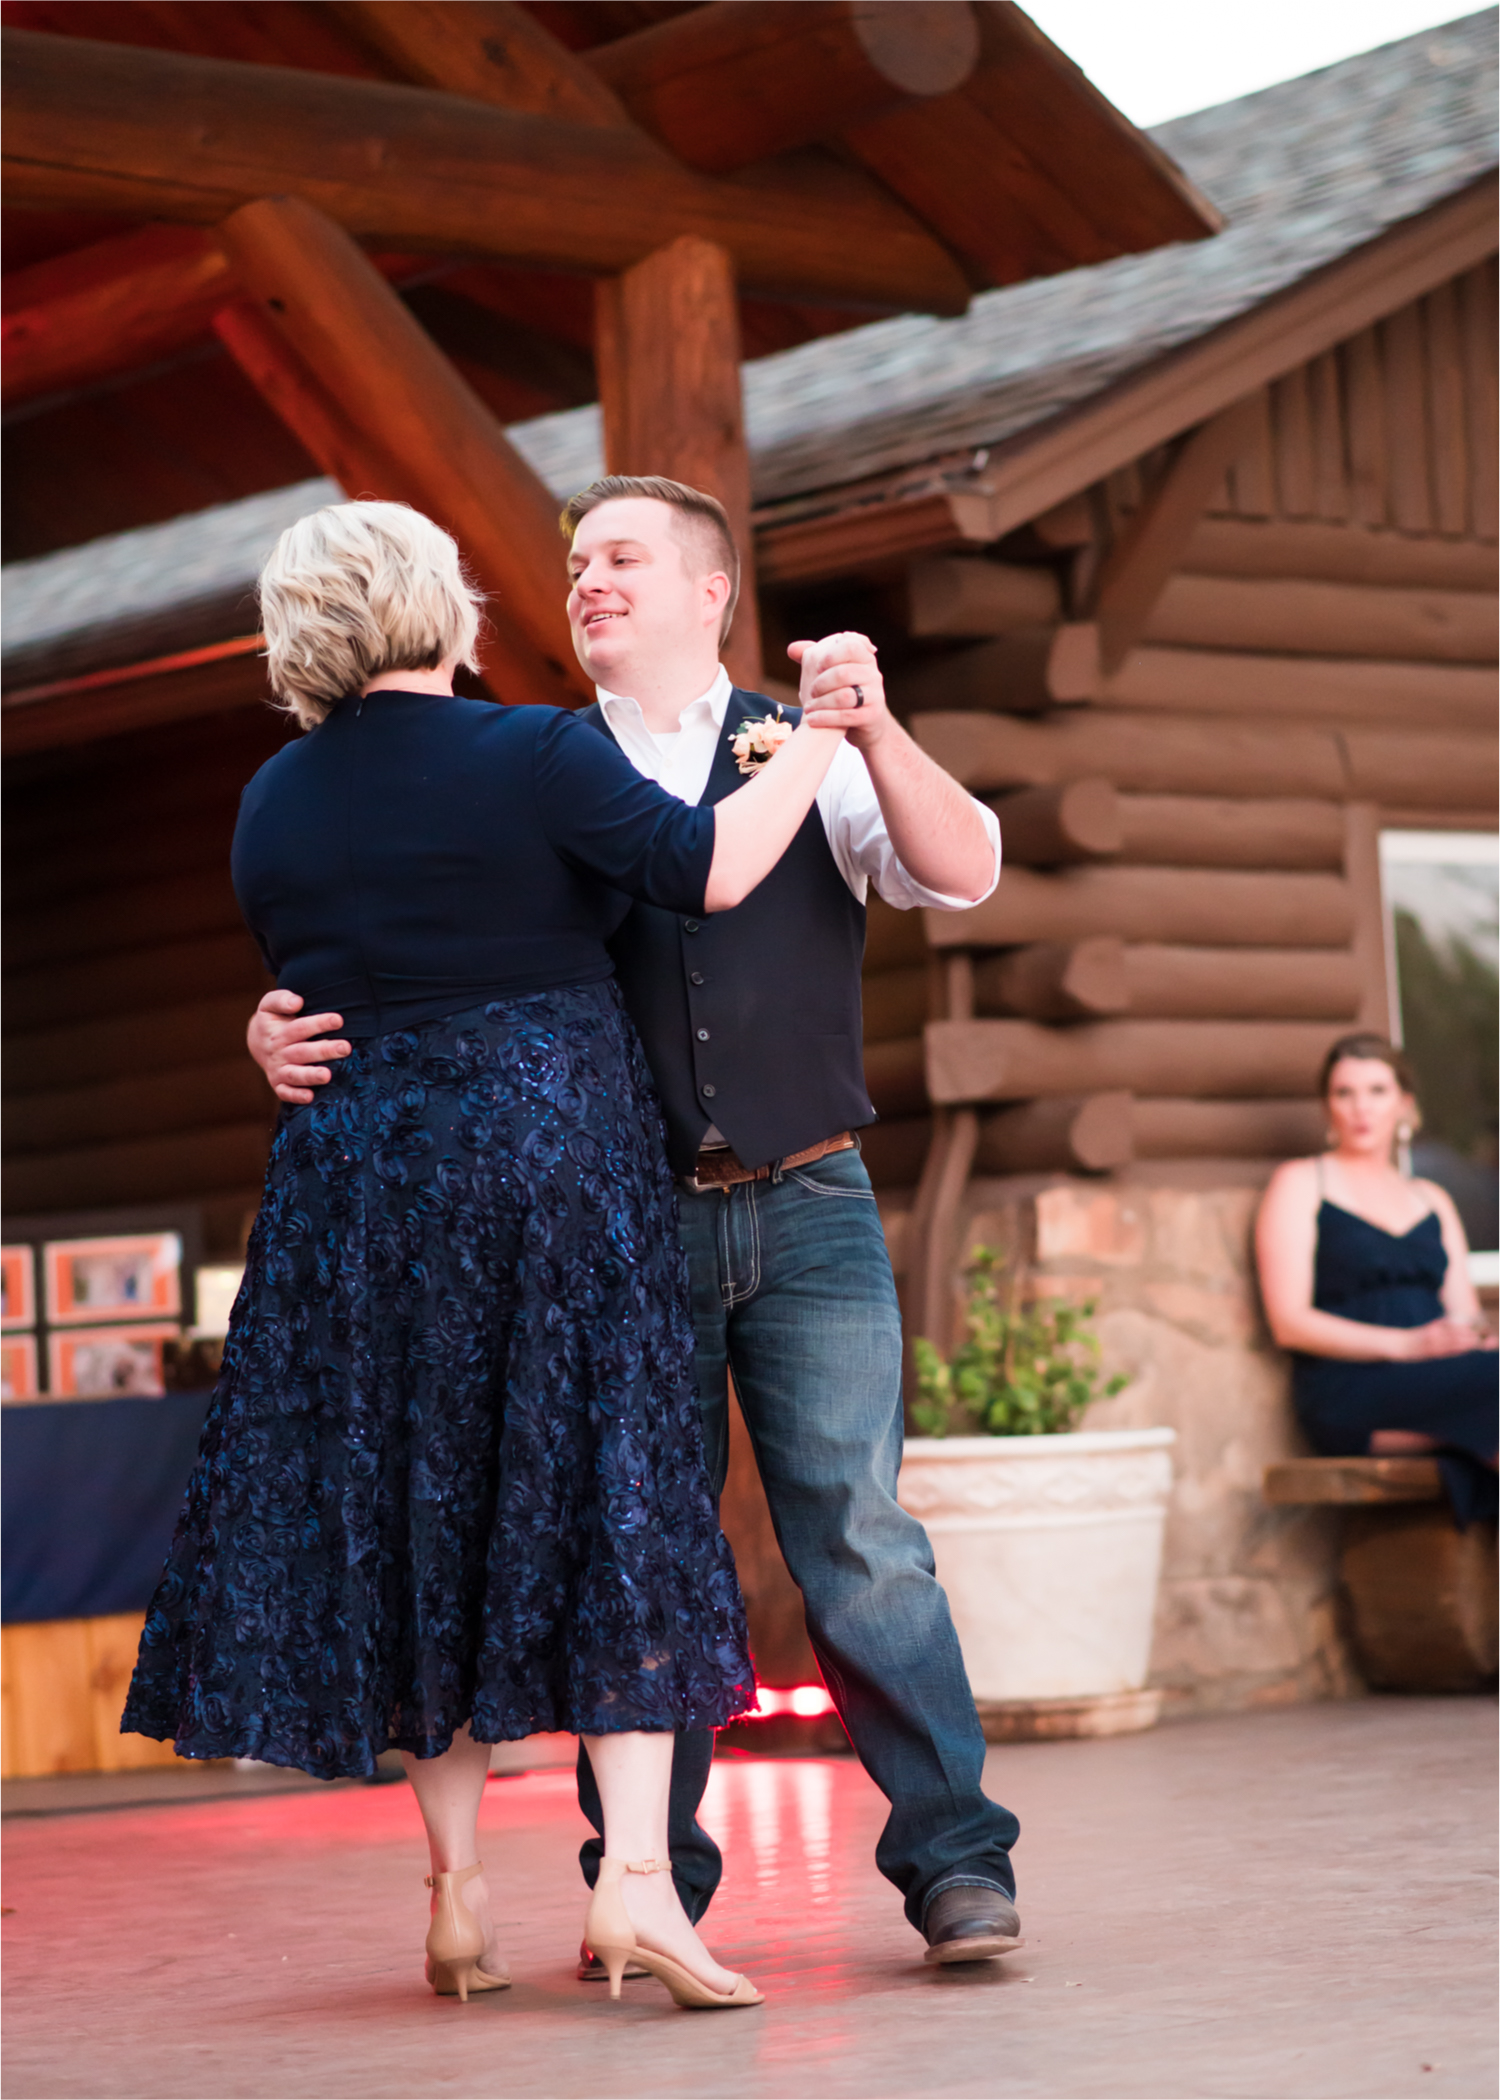 Summer Ellis Ranch Wedding in Loveland Colorado | Britni Girard Photography | Wedding Photo and Video Team | Mother Son Dance